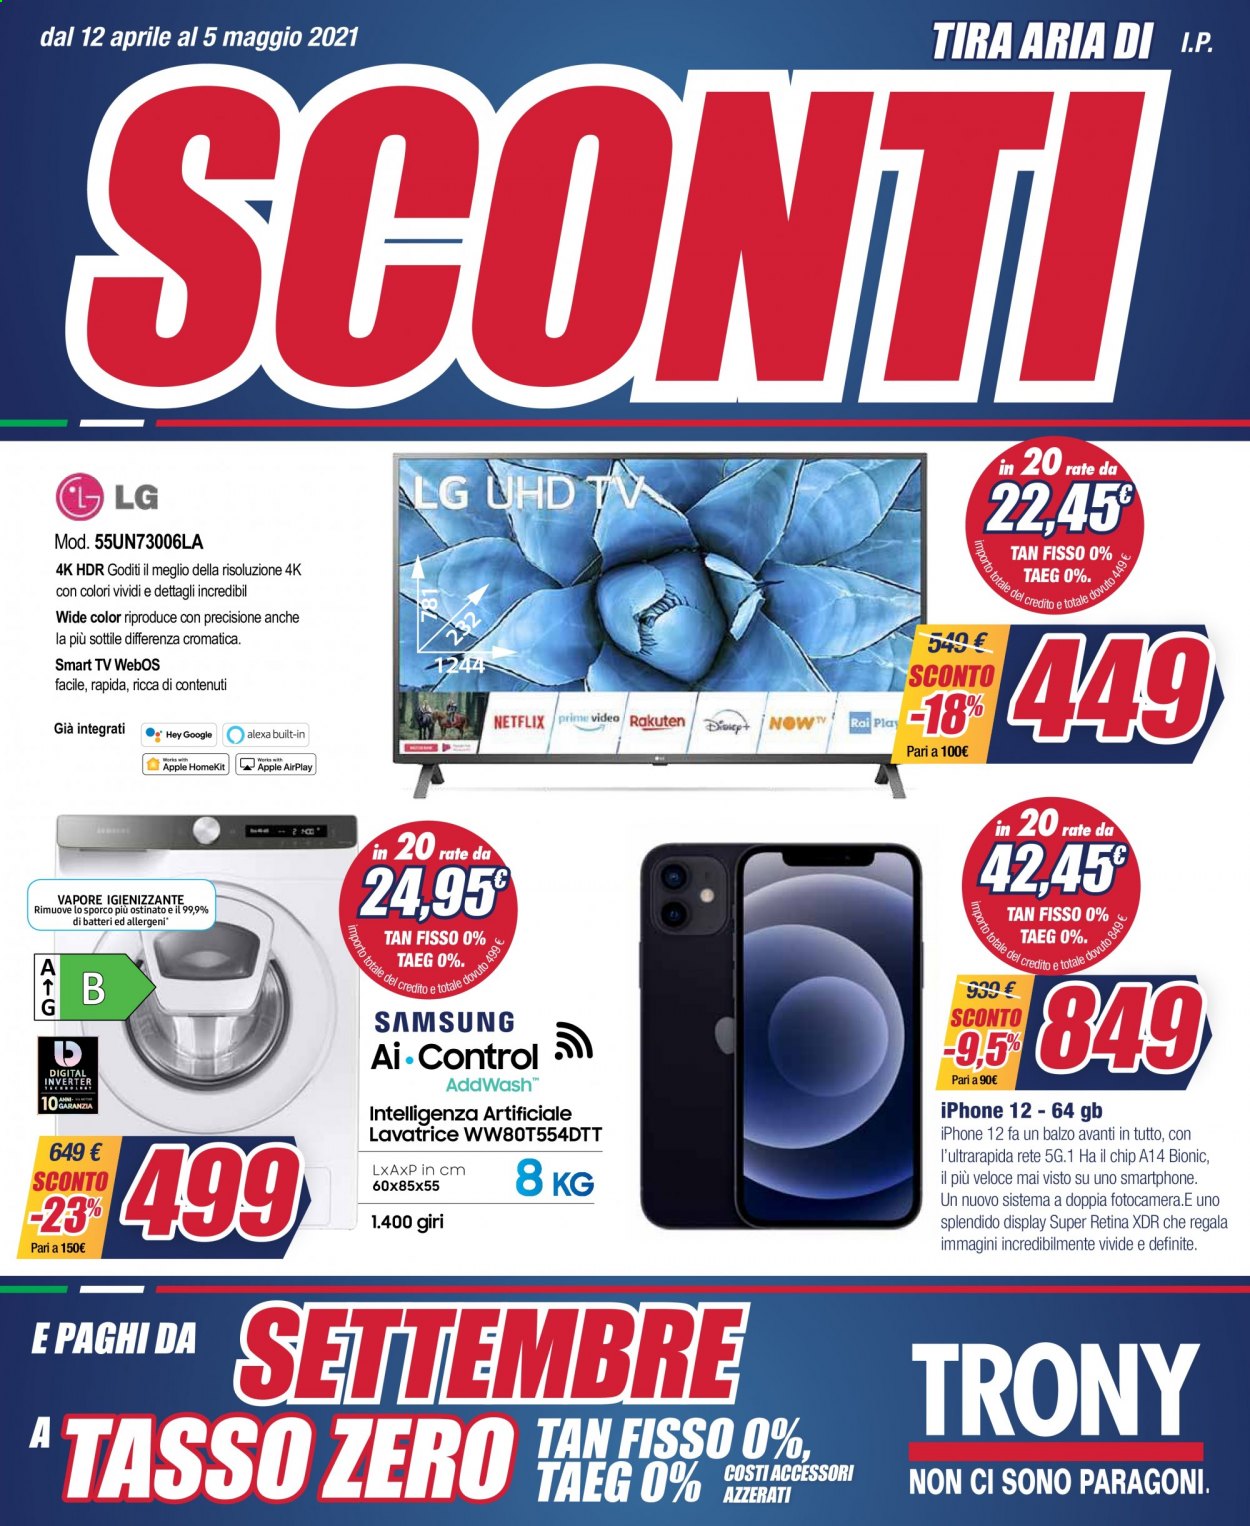 thumbnail - Volantino Trony - 12/4/2021 - 5/5/2021 - Prodotti in offerta - smartphone, iPhone, iPhone 12, Smart TV, televisore, lavatrice. Pagina 1.